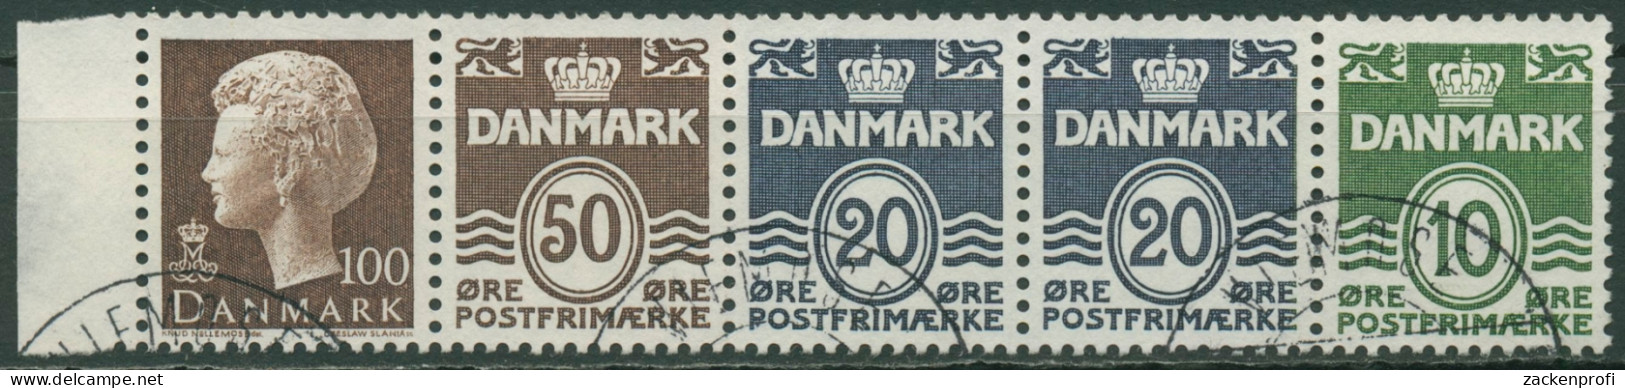 Dänemark 1977 Markenheftchenblatt H-Bl. 15 Gestempelt (C96549) - Booklets